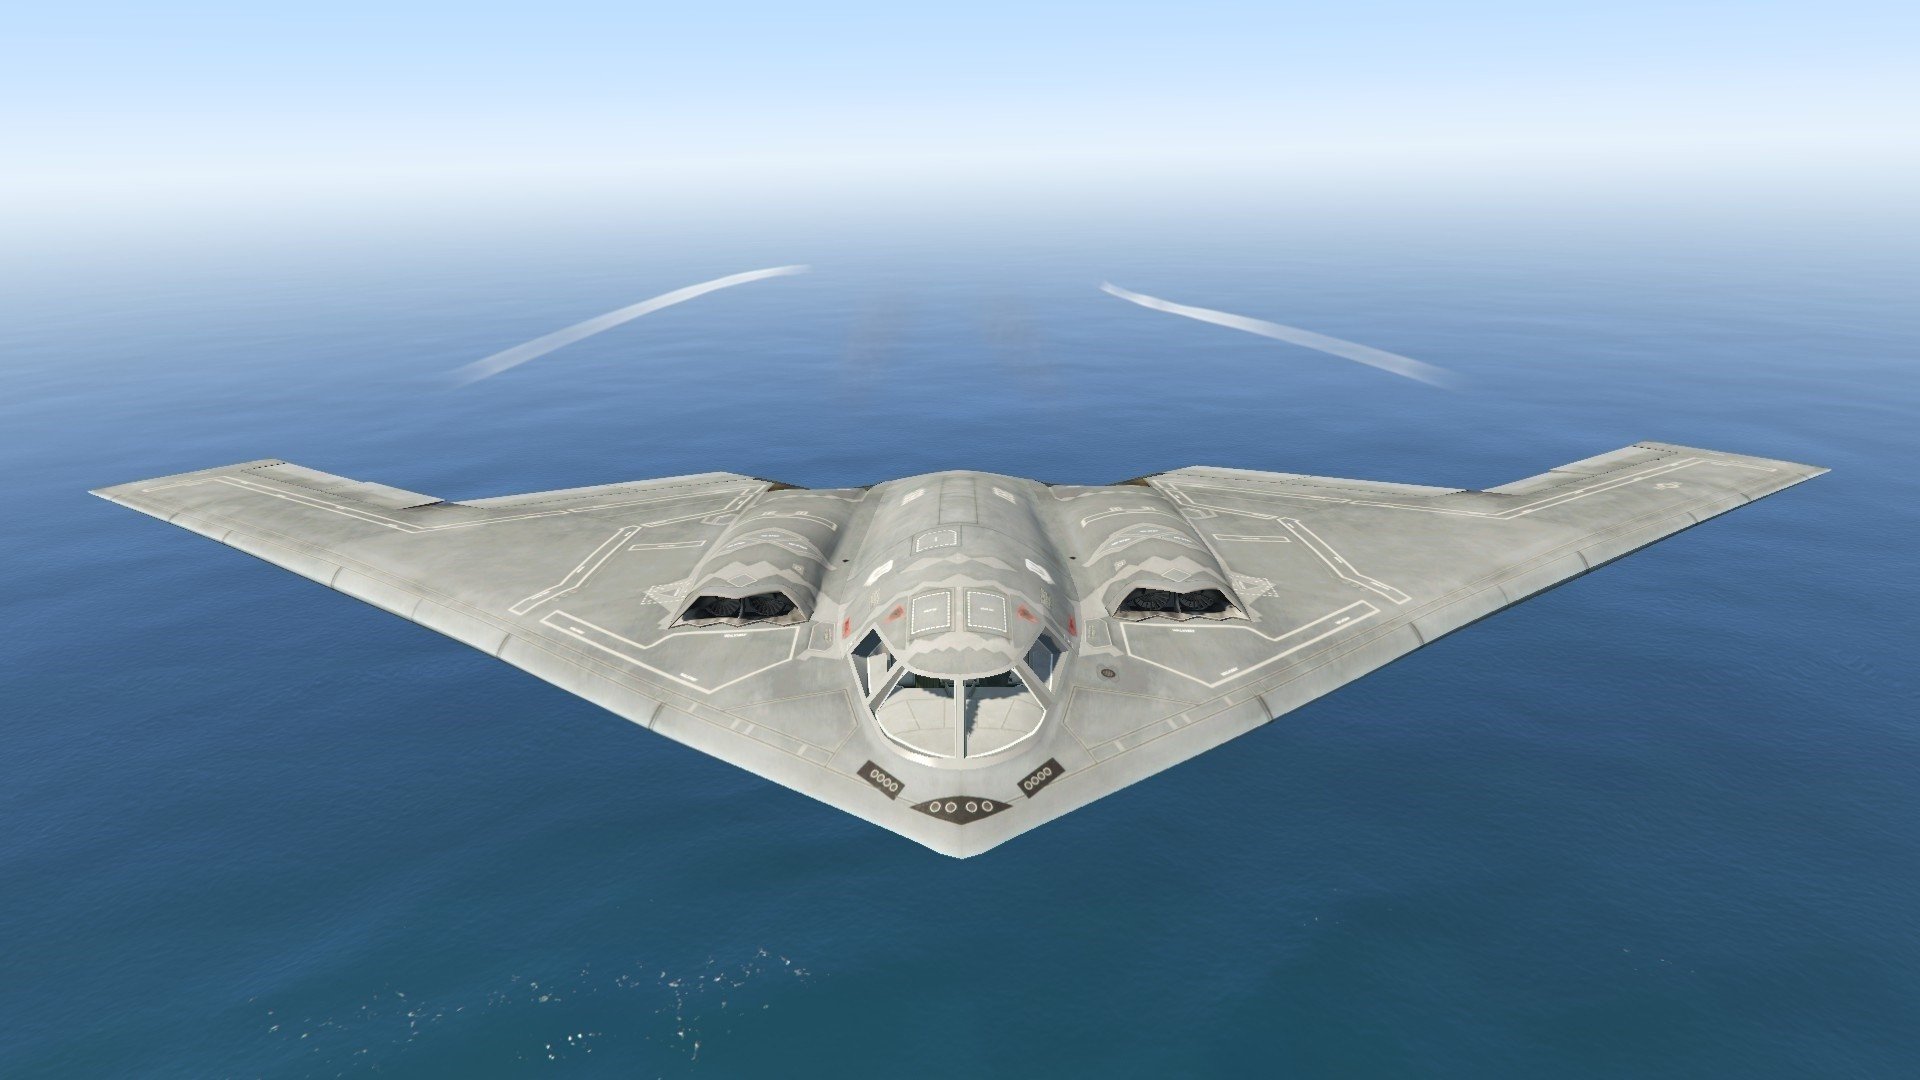 B 2 spirit скорость. B-2 Spirit: стелс-бомбардировщик. B-2 Spirit Stealth Bomber. Стелс b2 самолет невидимка. Стелс бомбардировщик б2.